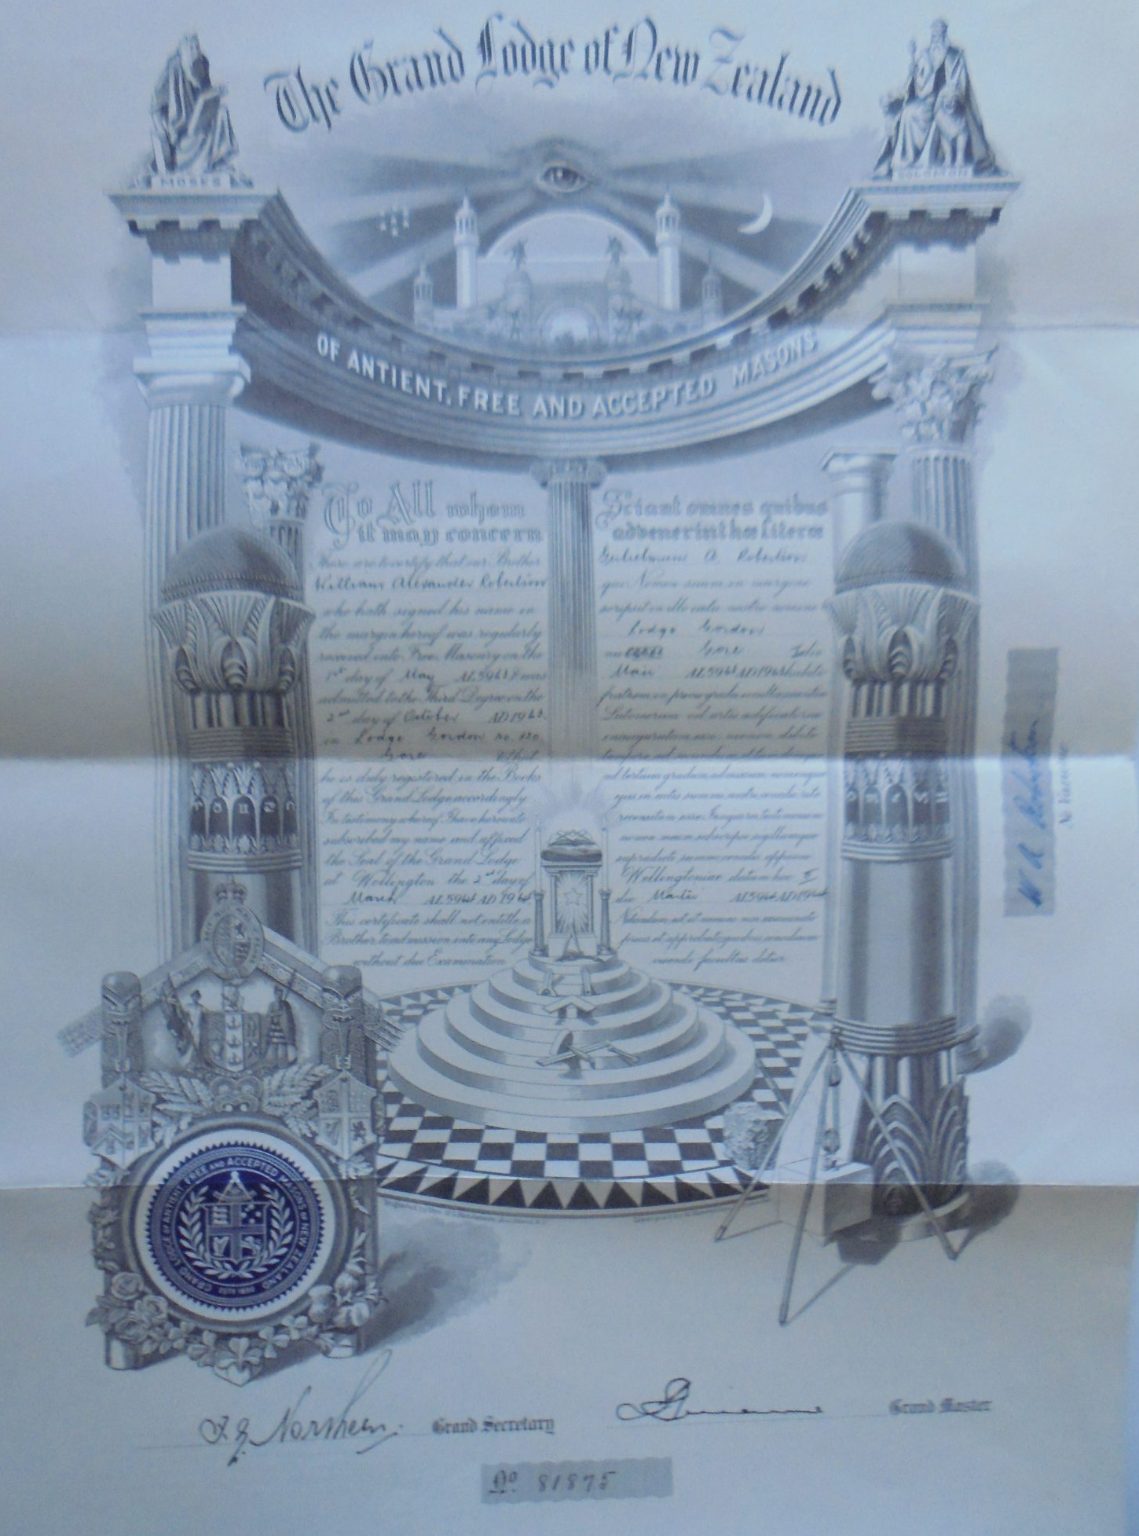 1960's Masonic Freemason Apron plus books, certificate and leaflets (in case)